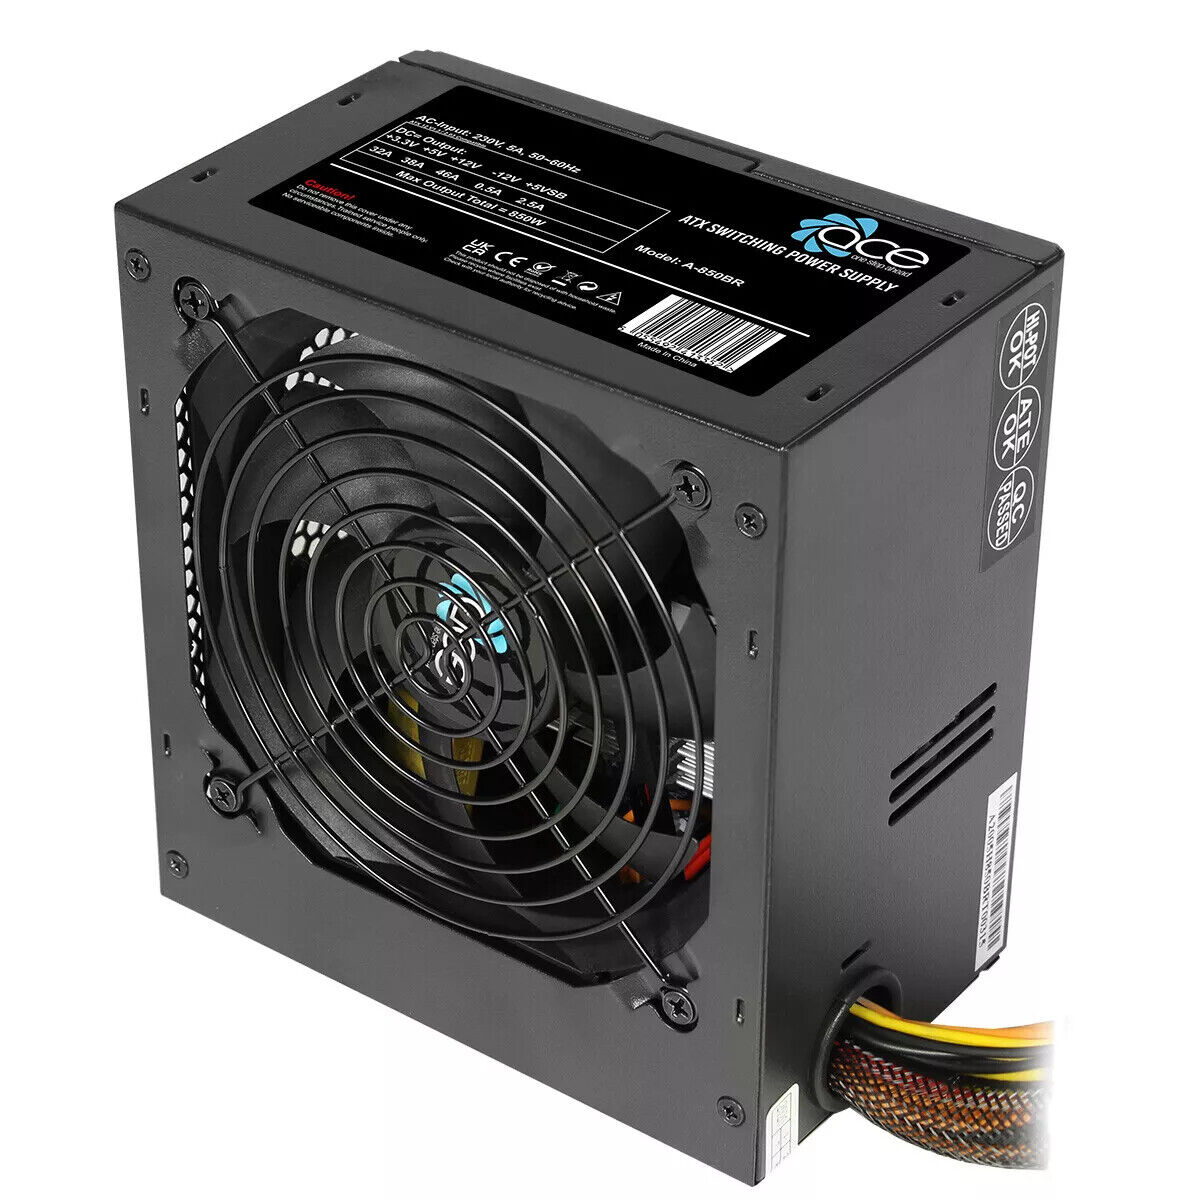 ACE Black PSU 500W/650W/750W/850W Power Supply Desktop PC ATX 120mm Fan Lot